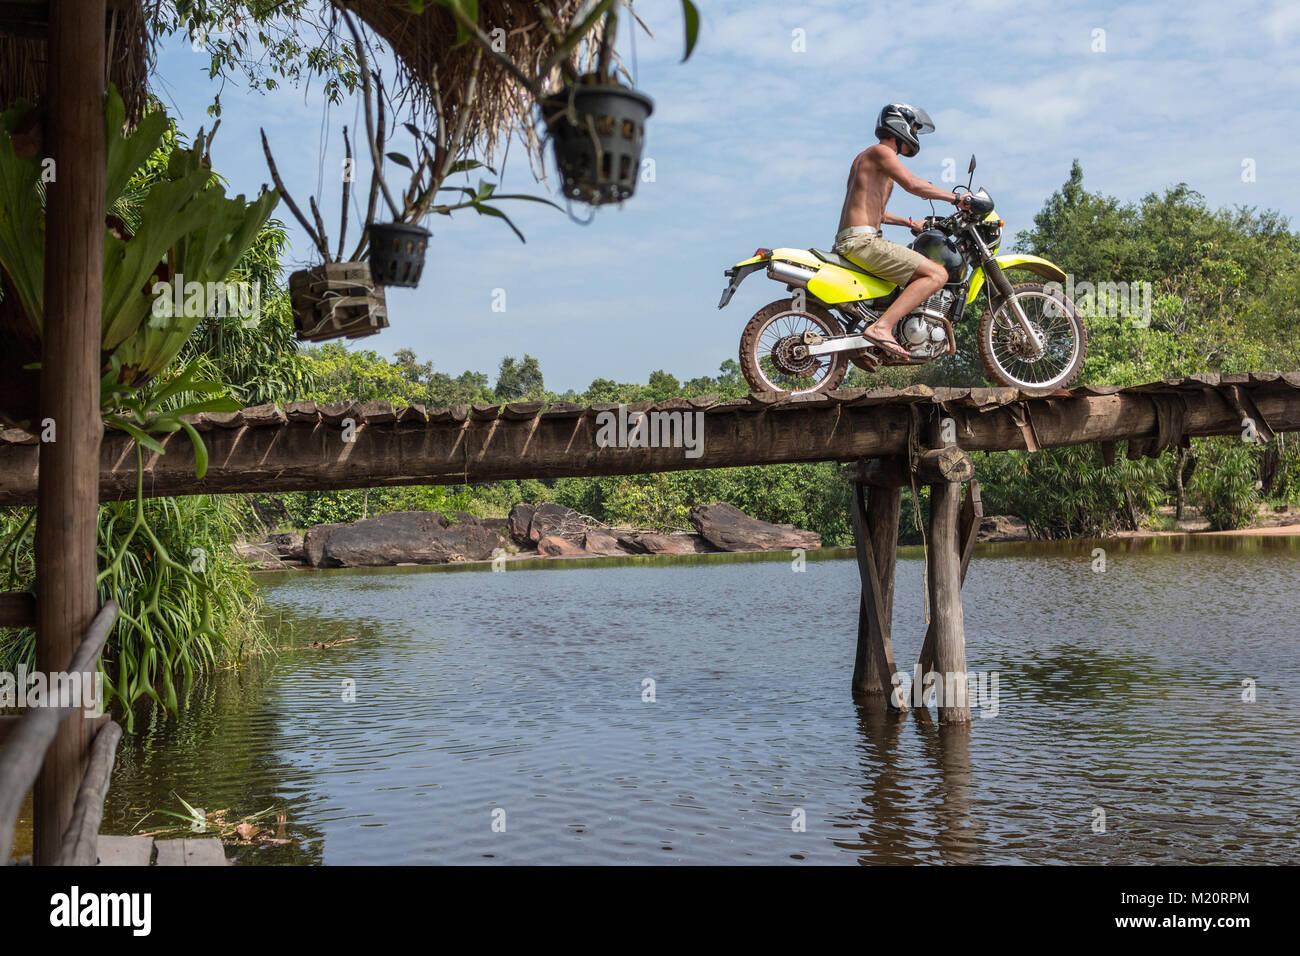 young man on cross motorbike crossing wooden bridge in jungle landscape Stock Photo